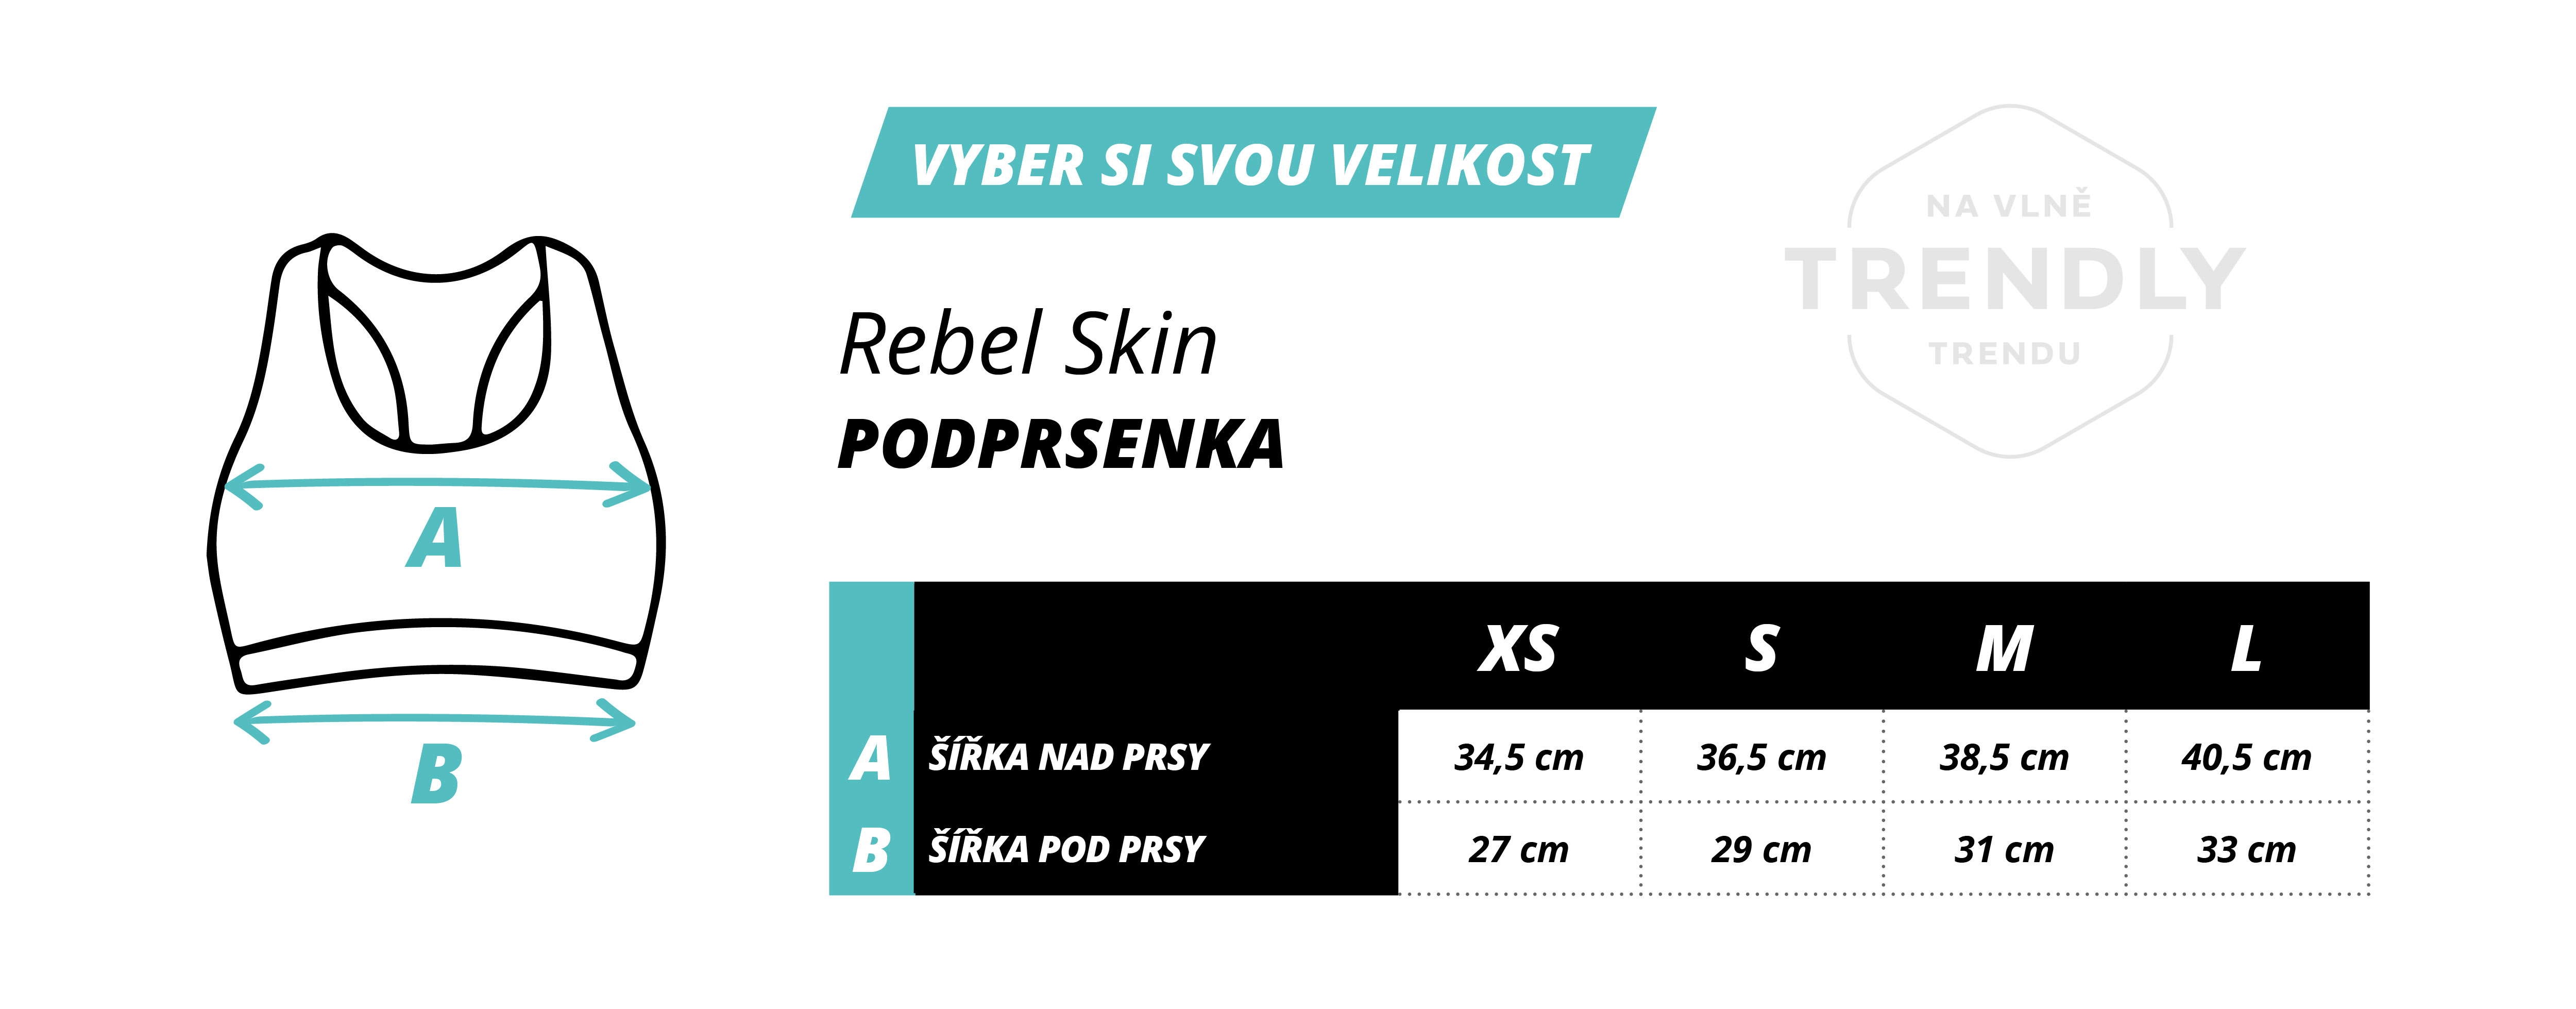 trendly_velikosti_podprsenka_rebel